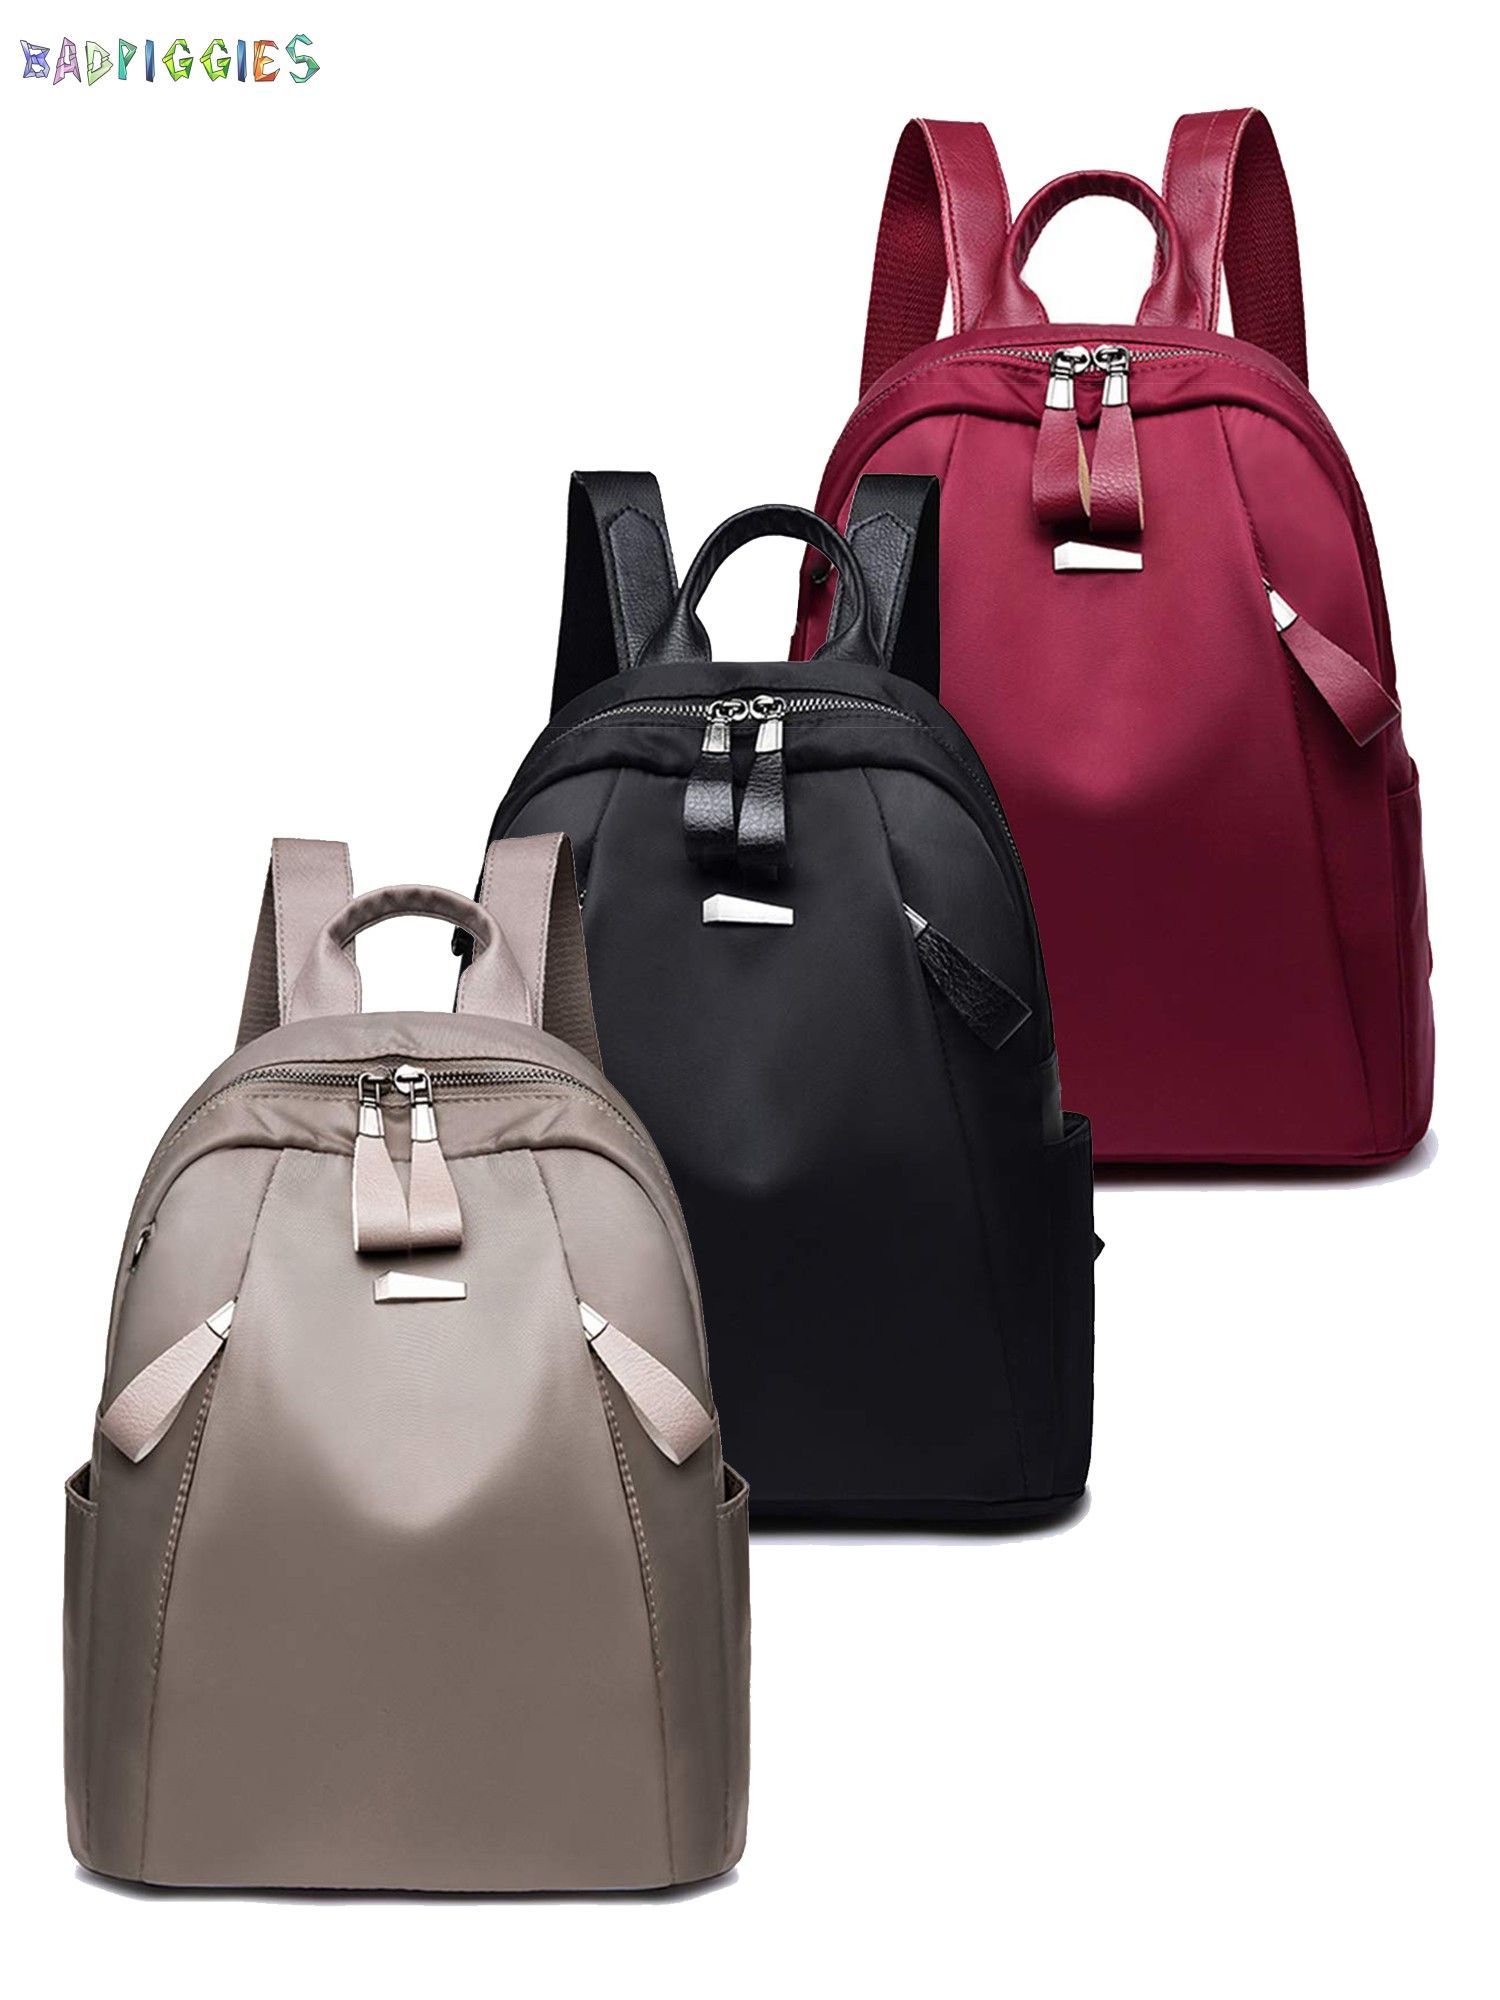 BadPiggies Women Backpack Waterproof Oxford Handbag Shoulder Travel Bag School Bag Anti-theft Rucksack - image 2 of 11